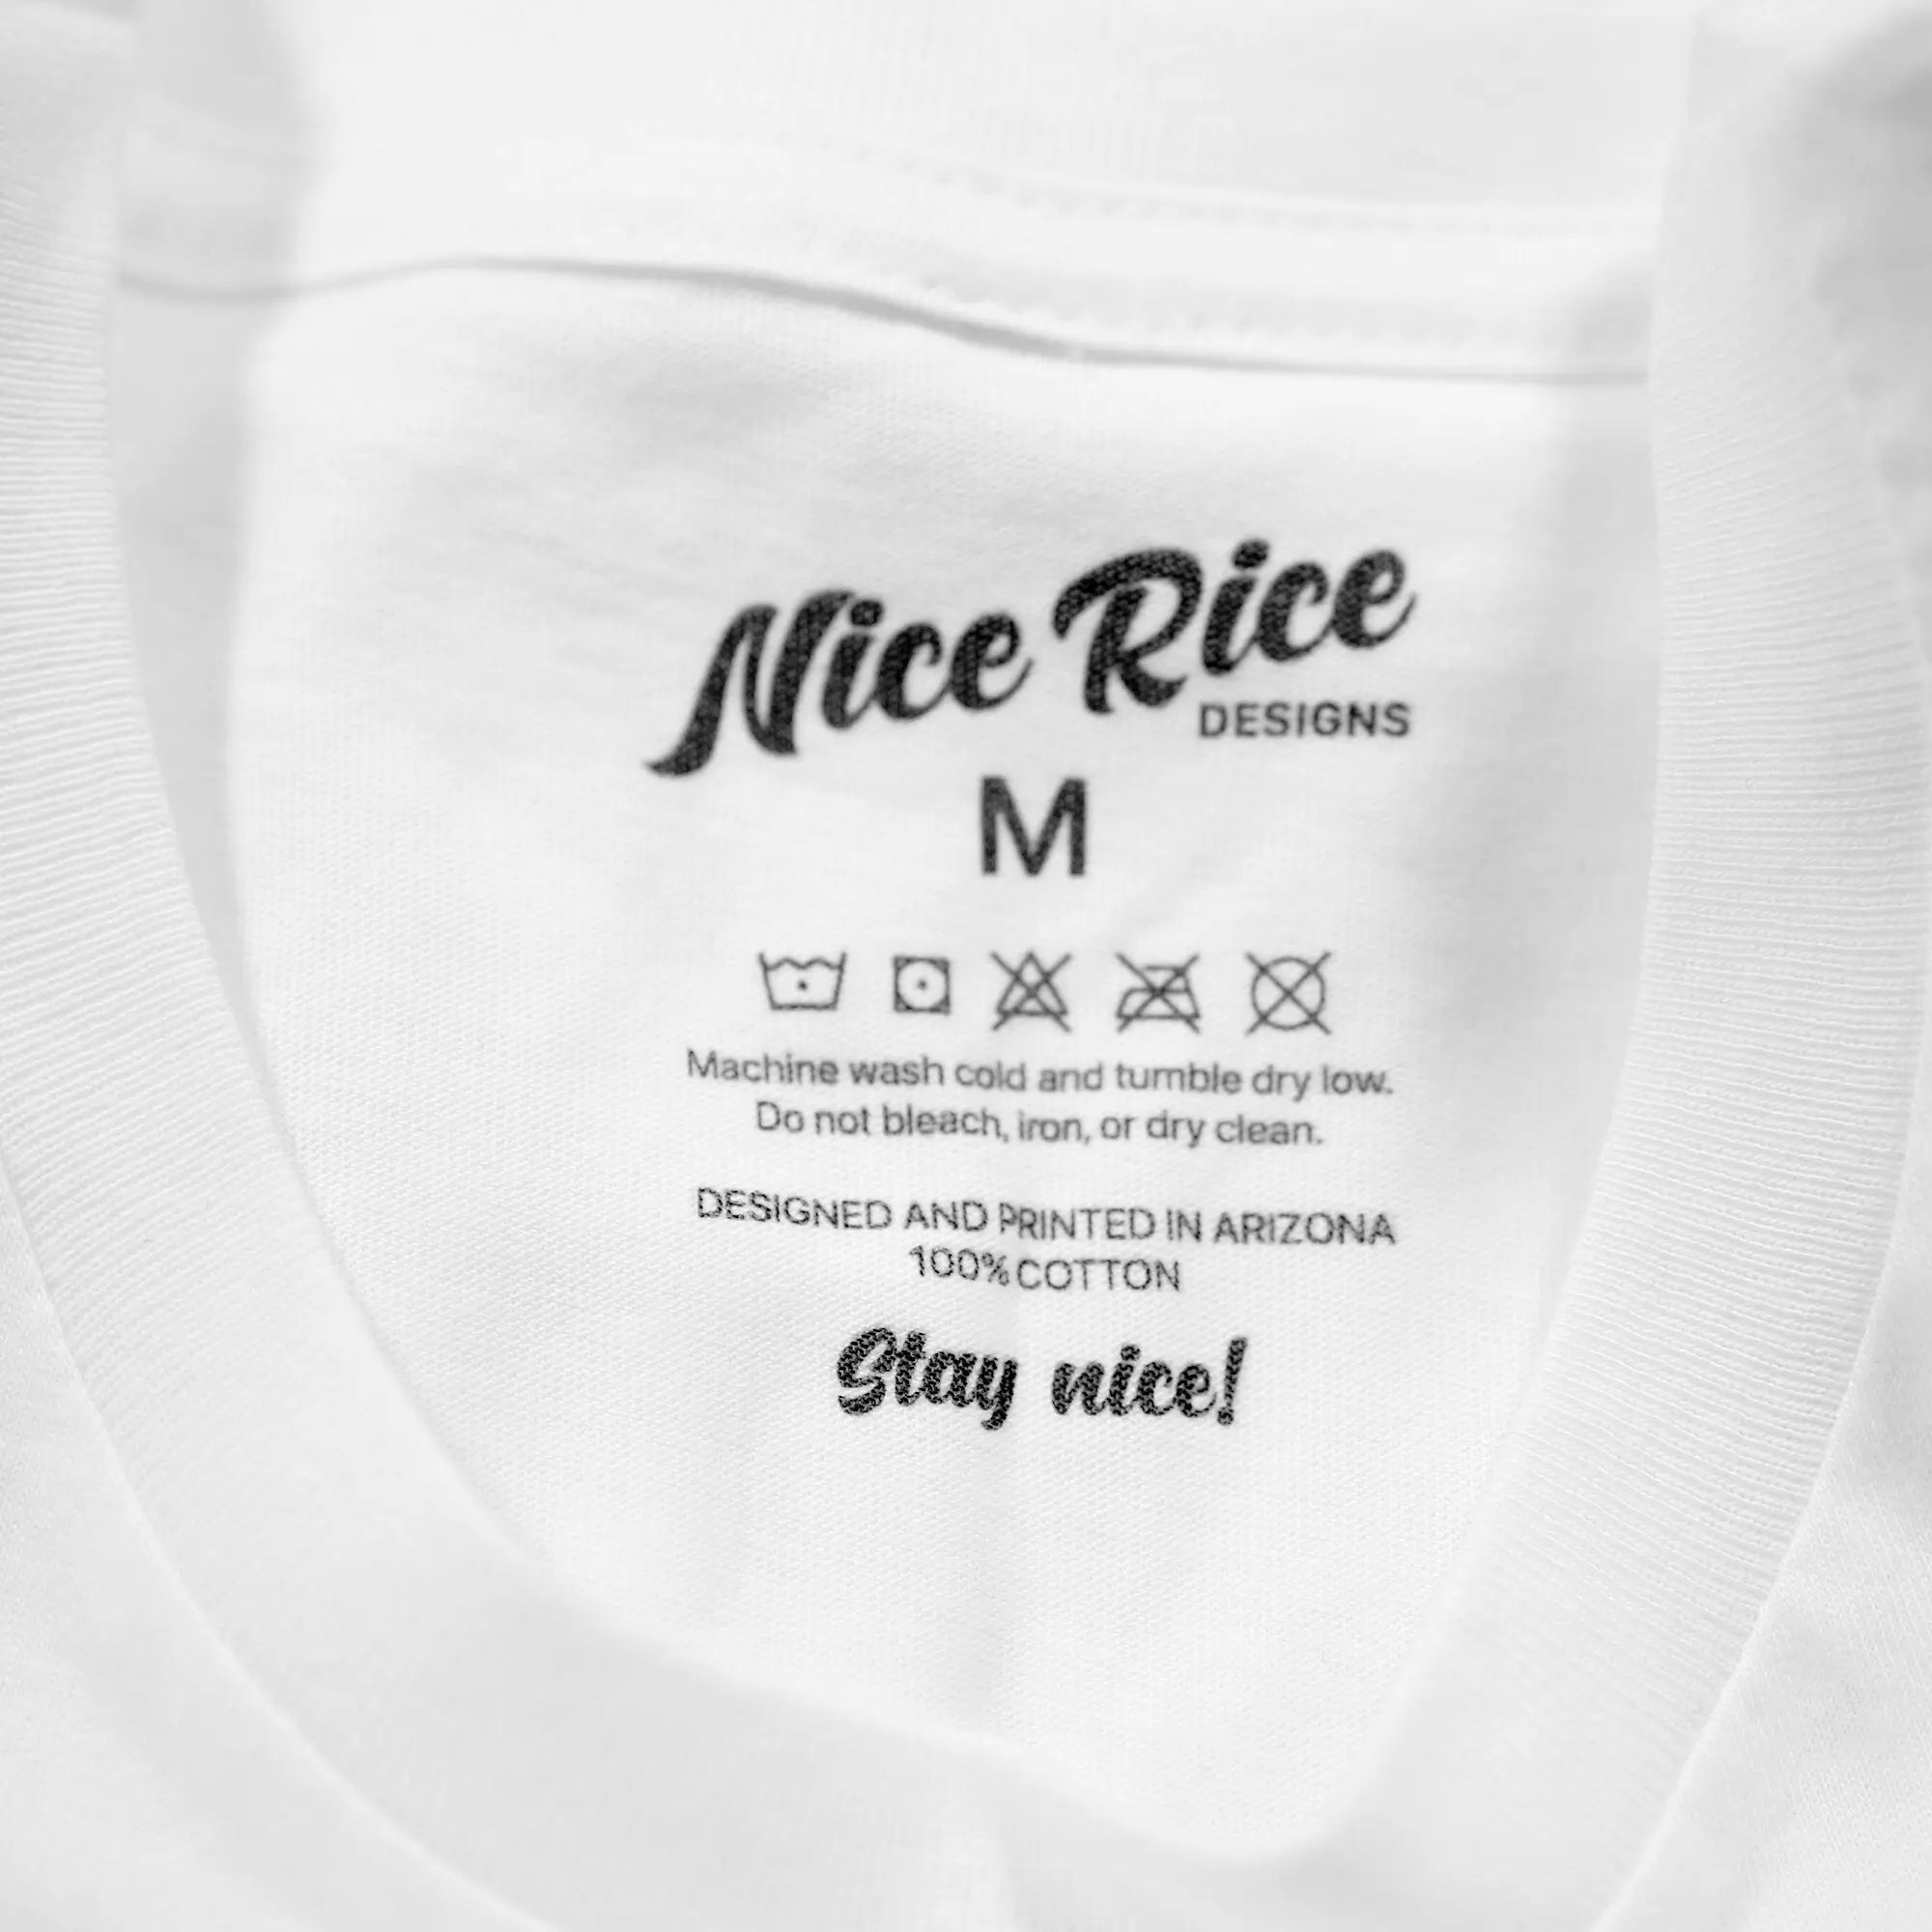 I Love Turtles Shirt by Nice Rice Designs